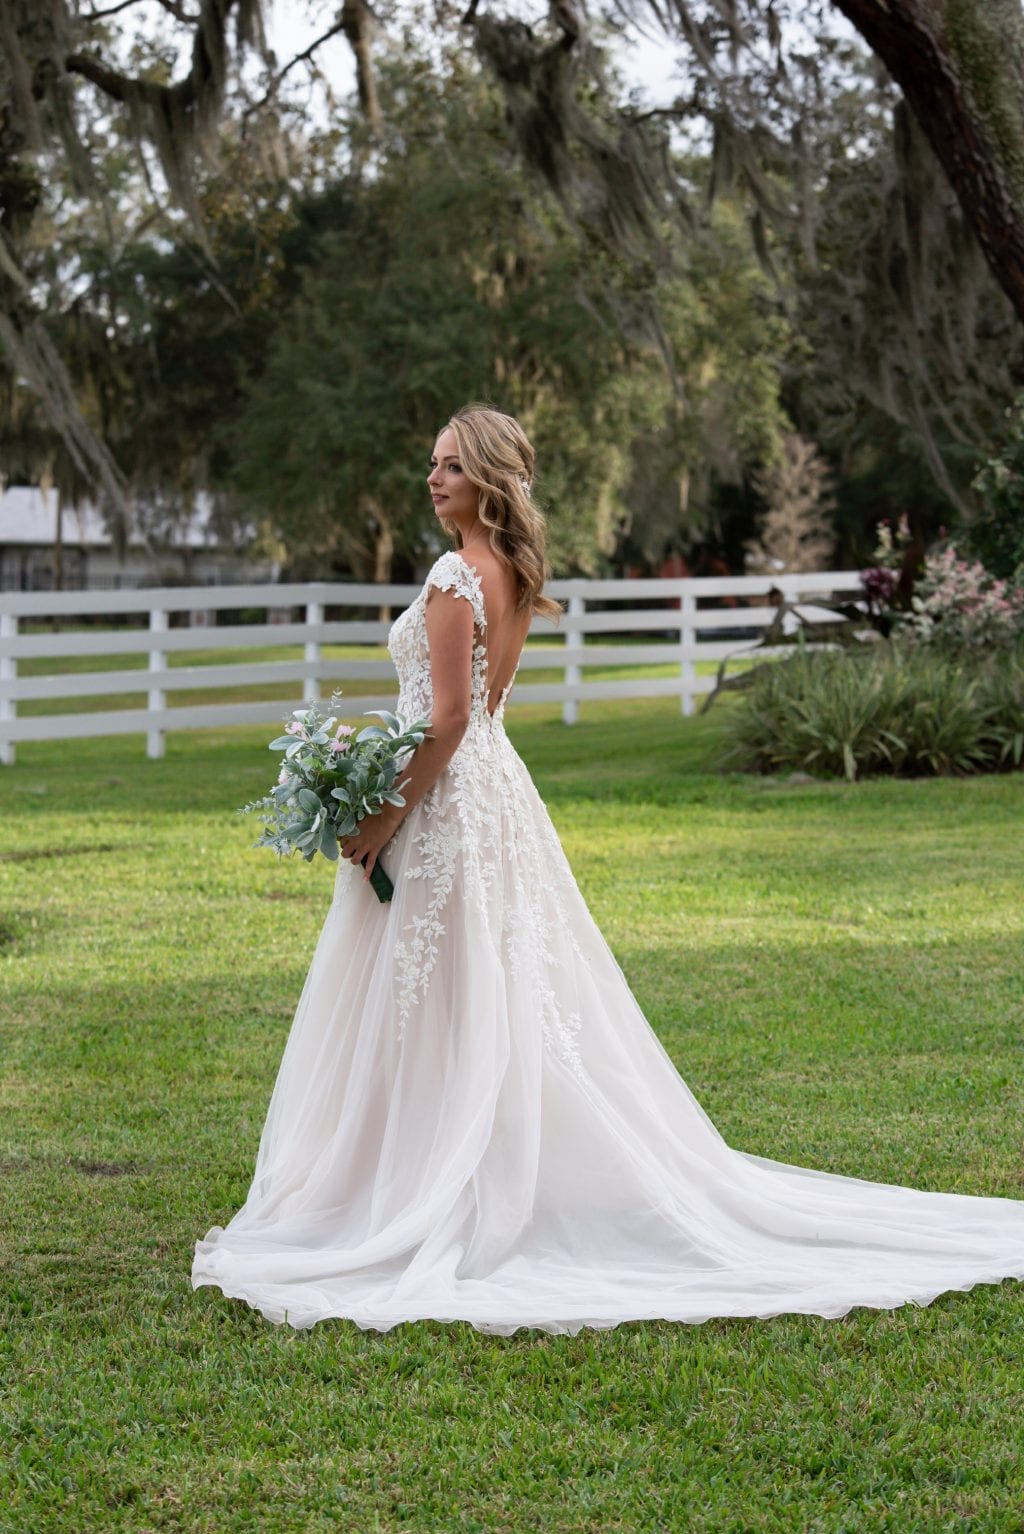 Gorgeous wedding dress for Florida wedding